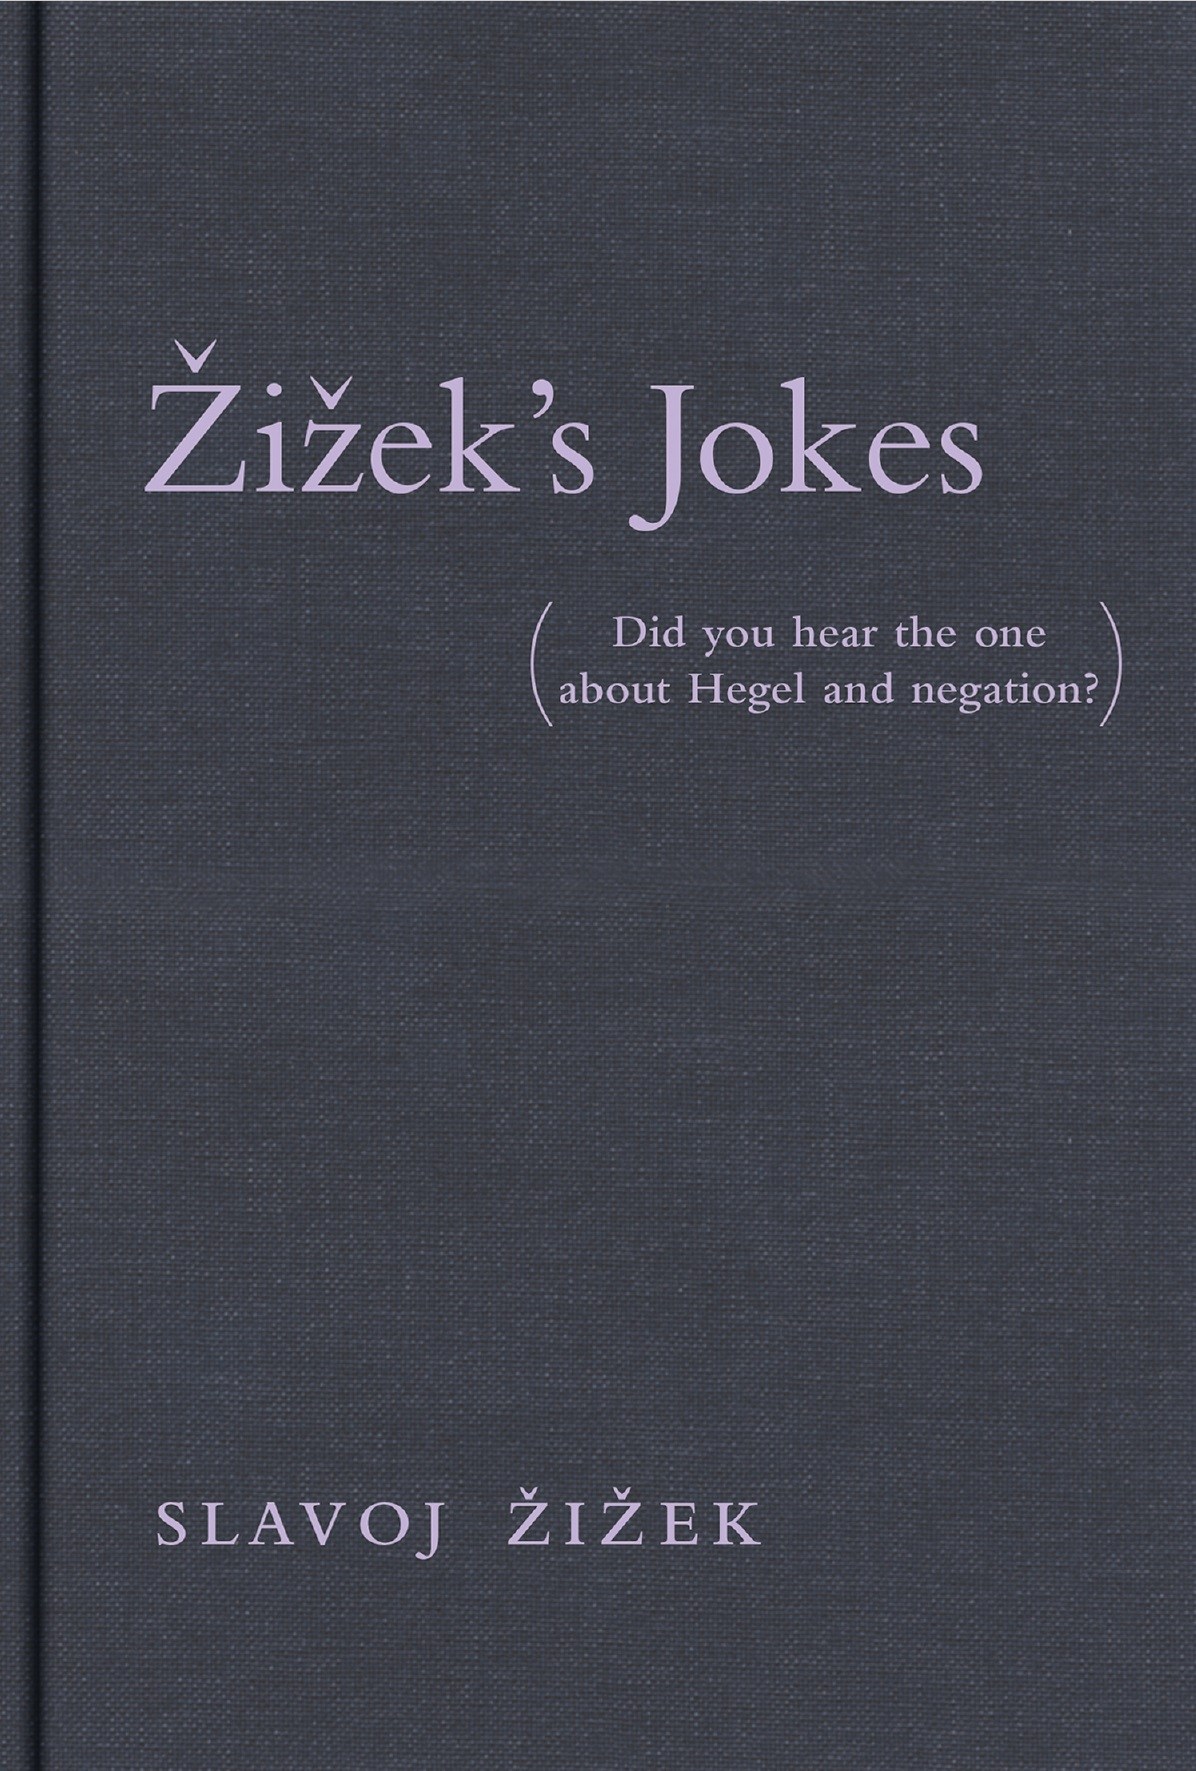 Zizeks-jokes-theoryleaks.jpg